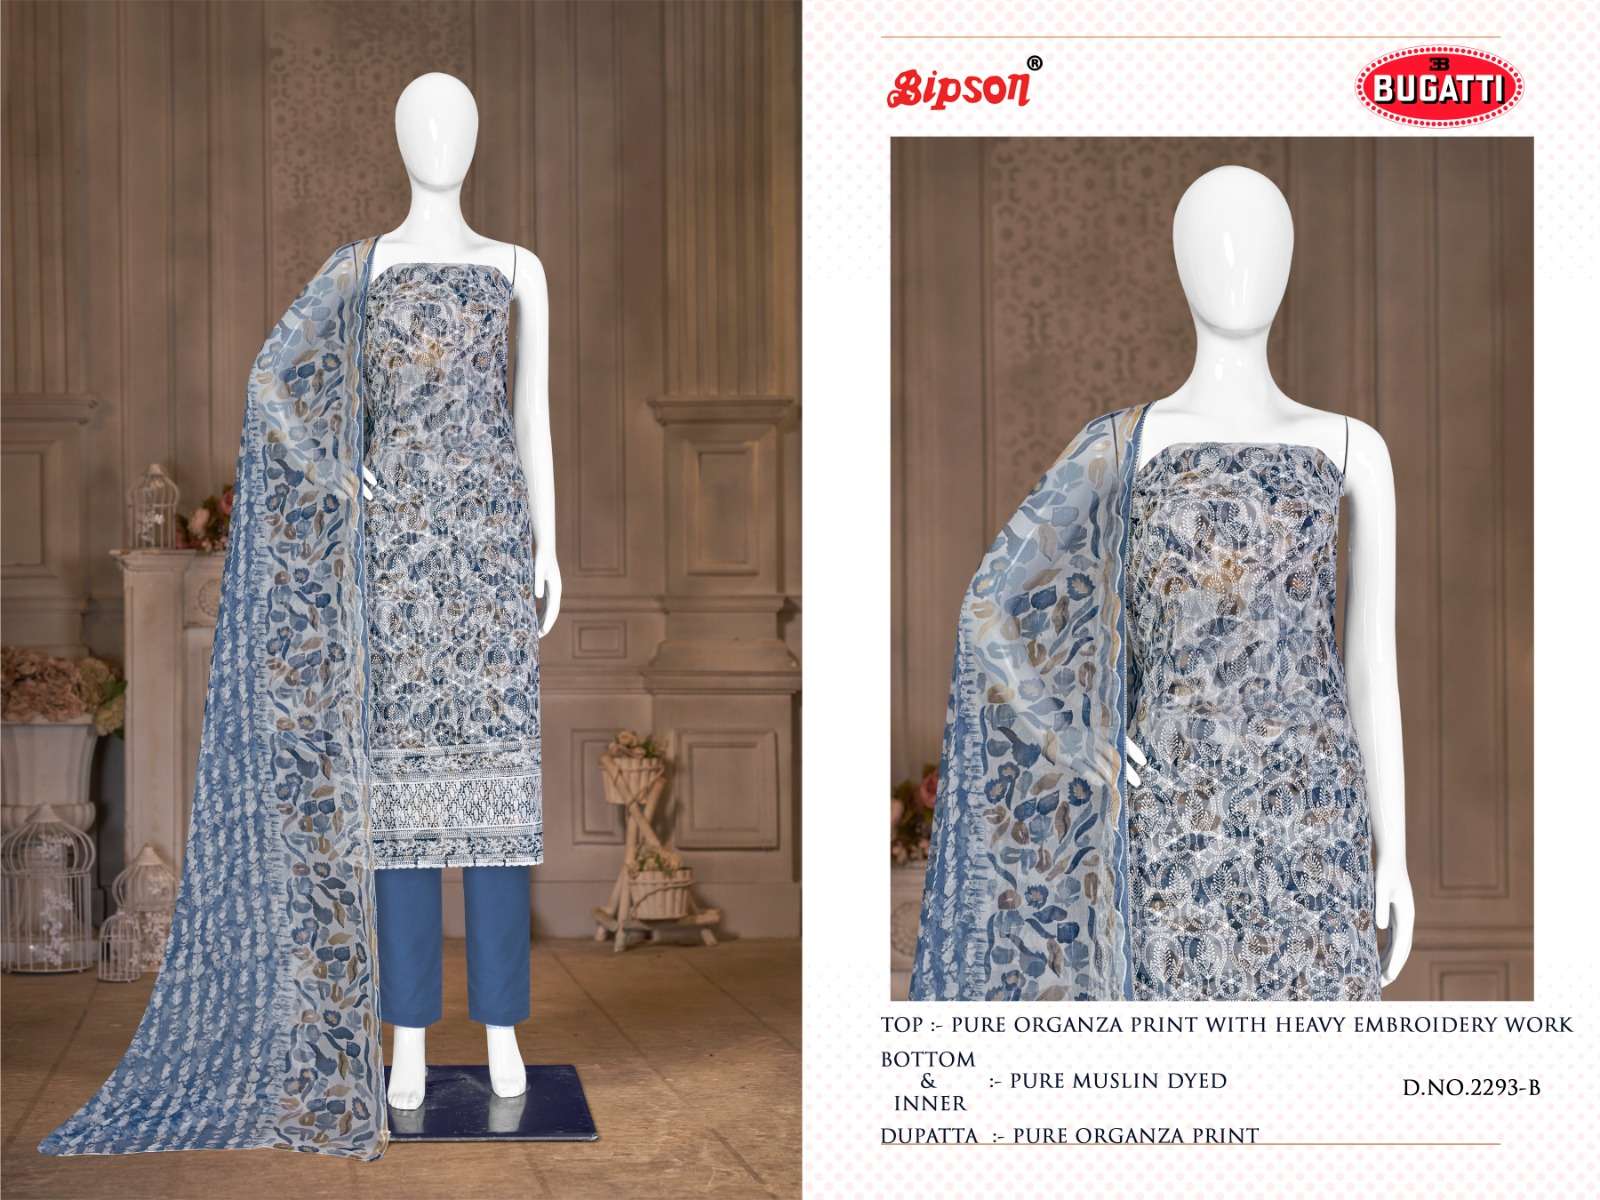 bipson prints bugatti 2293 colour series latest fancy pakistani salwar kameez wholesaler surat gujarat